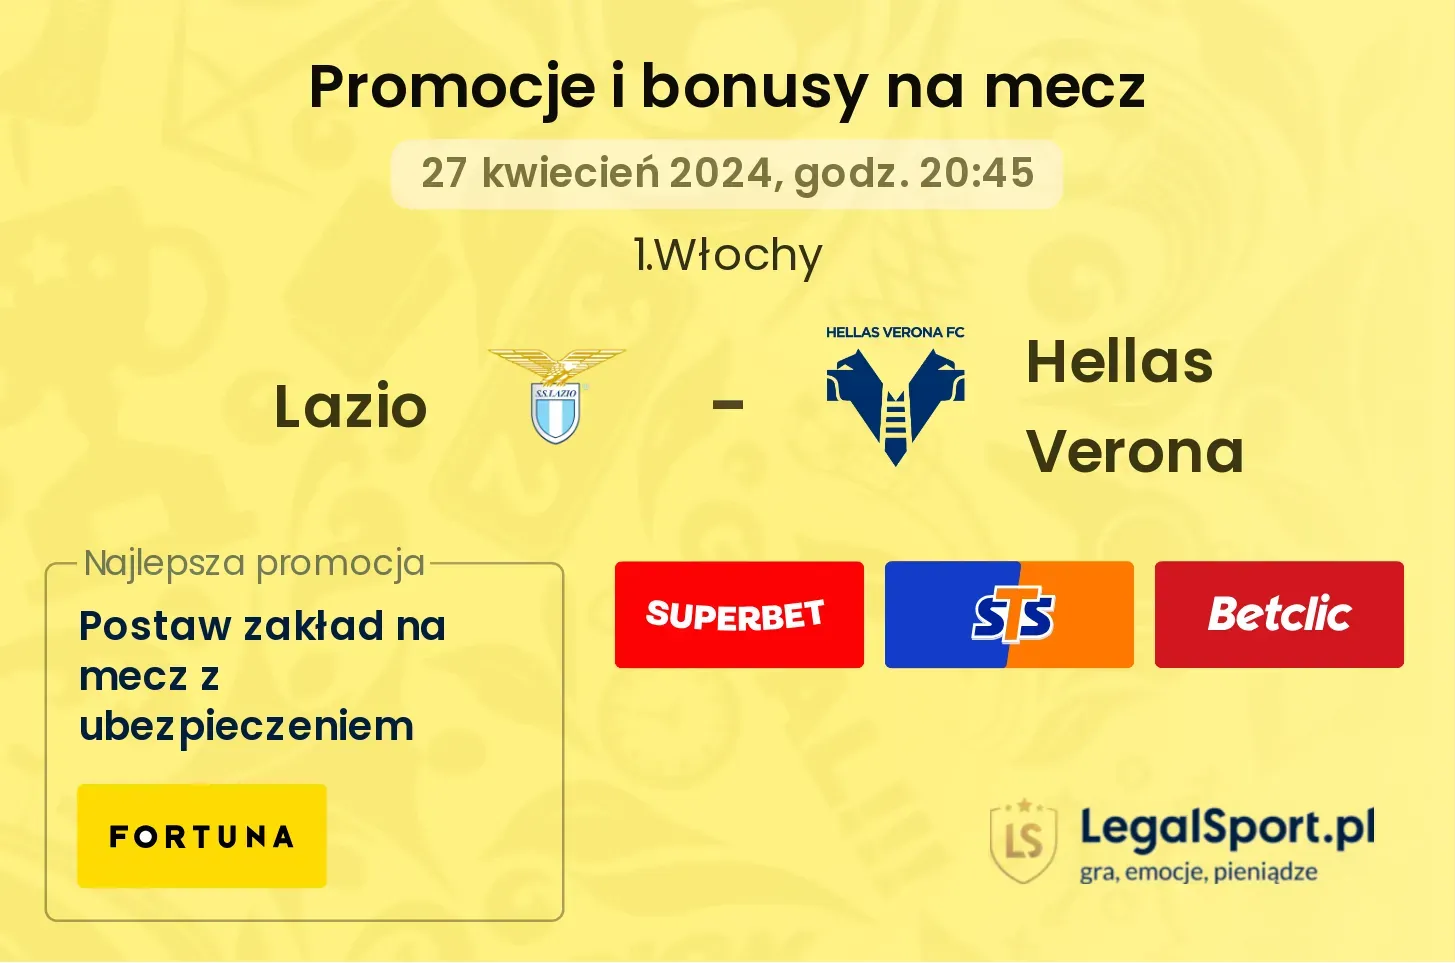 Lazio - Hellas Verona promocje bonusy na mecz